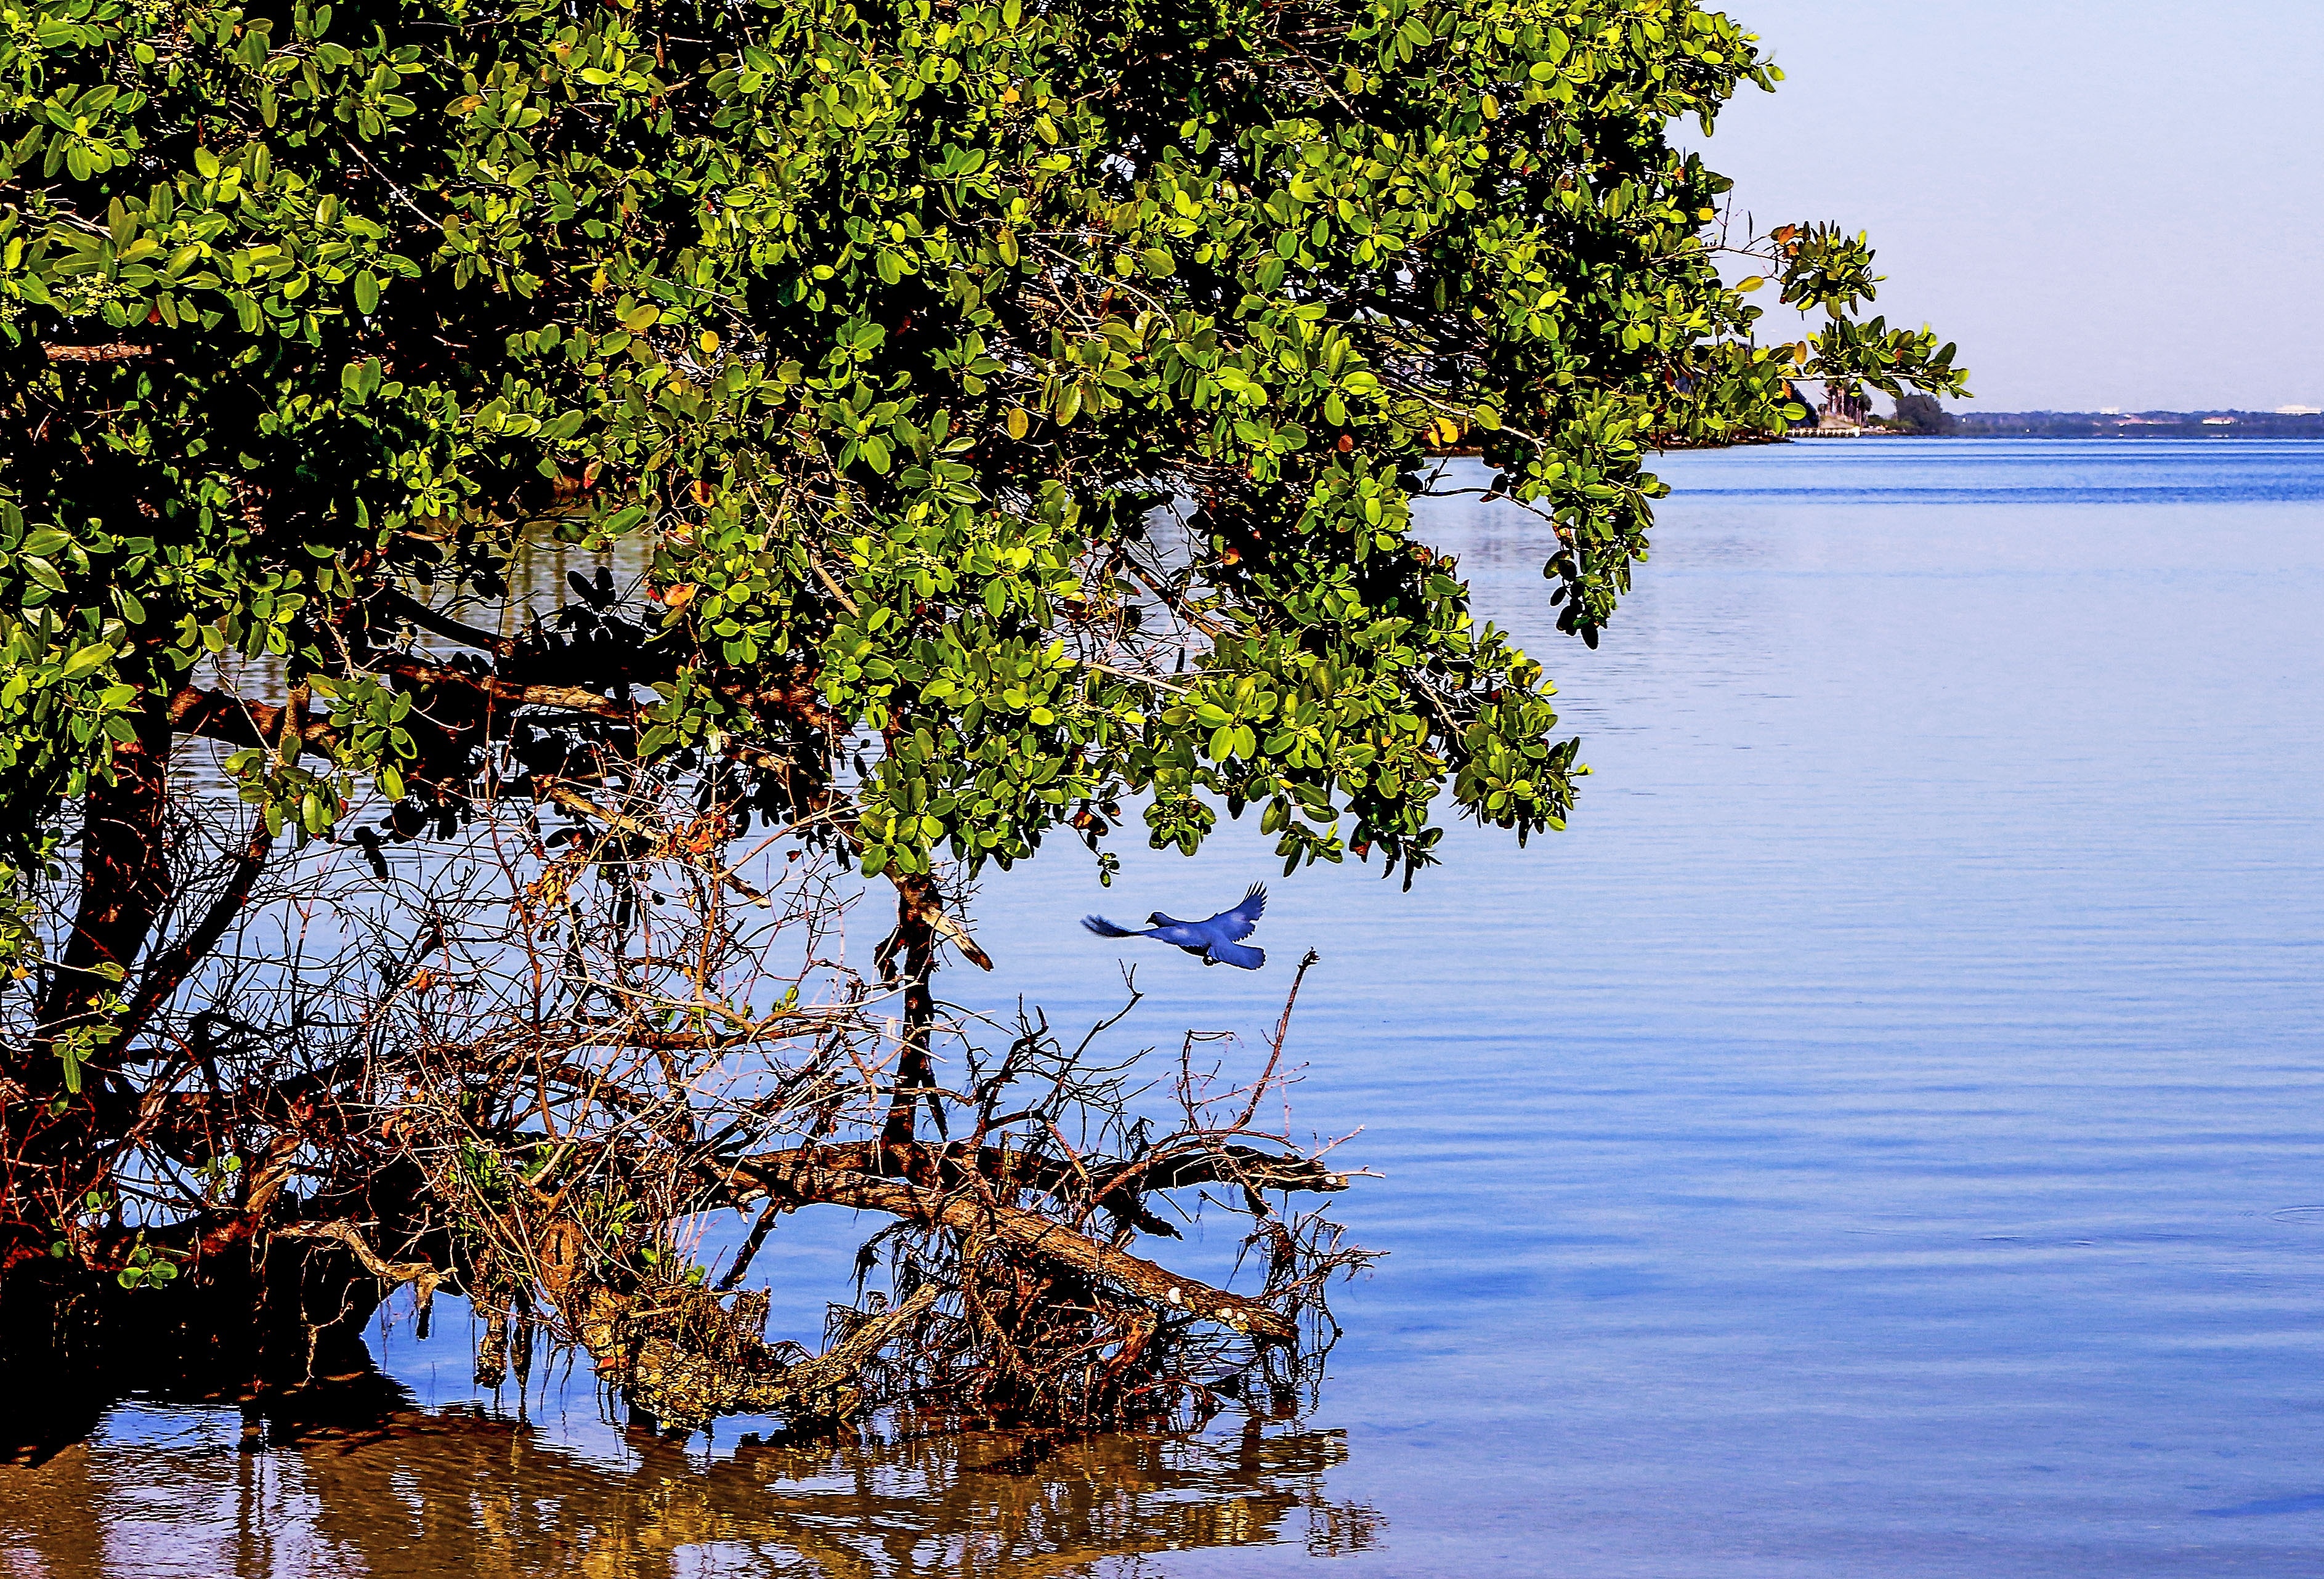 mangrove tree